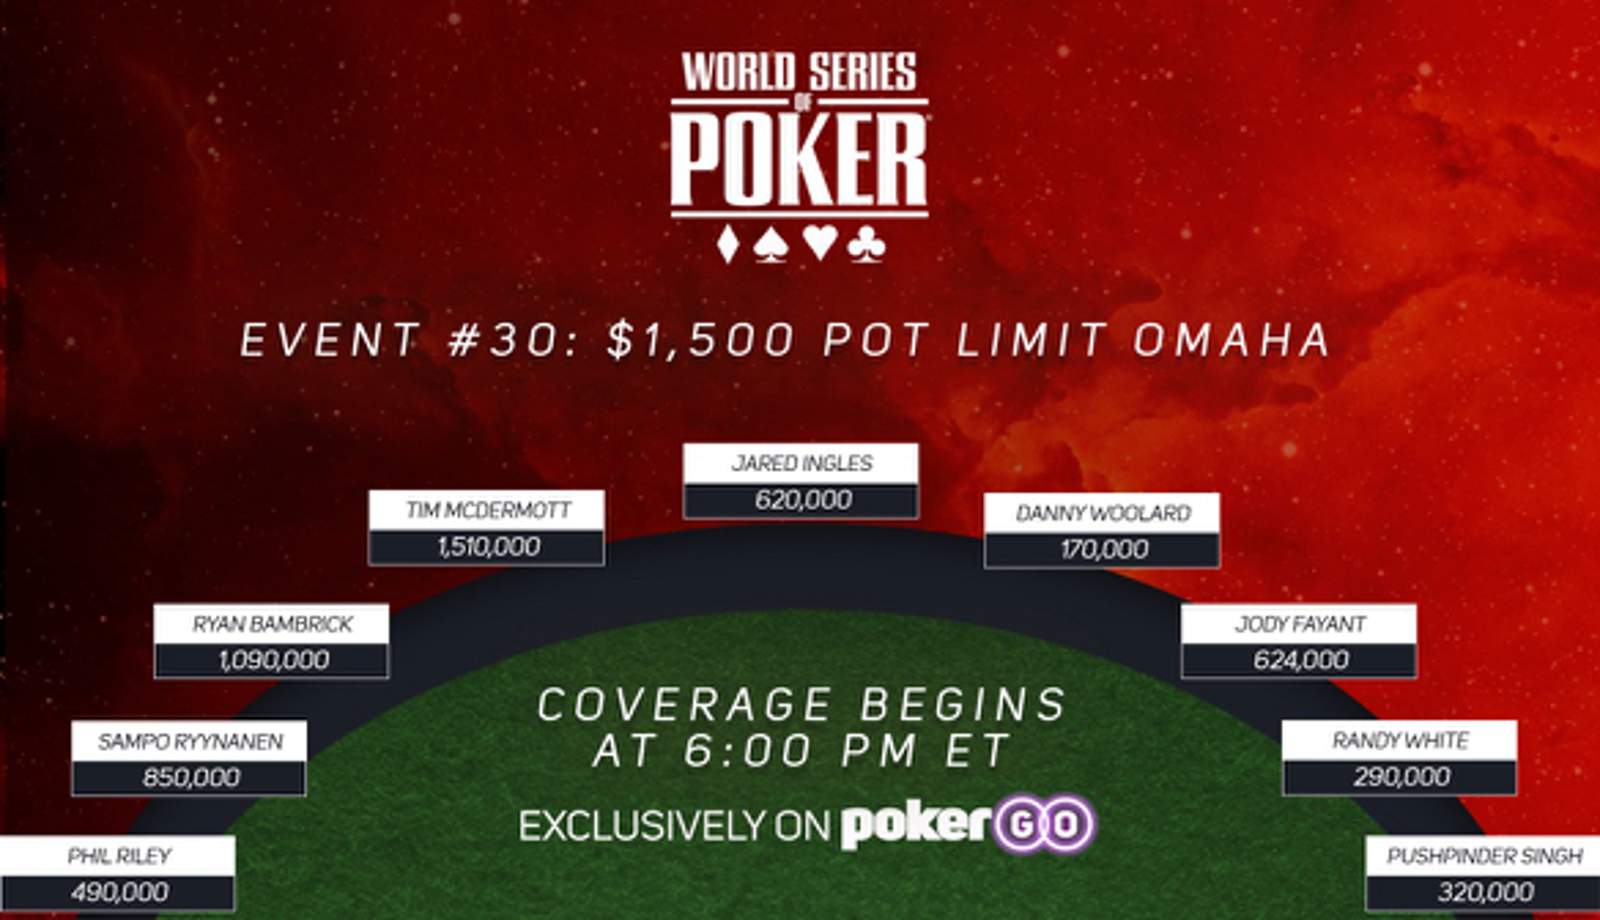 $1,500 Pot Limit Omaha Final Table Live on PokerGO